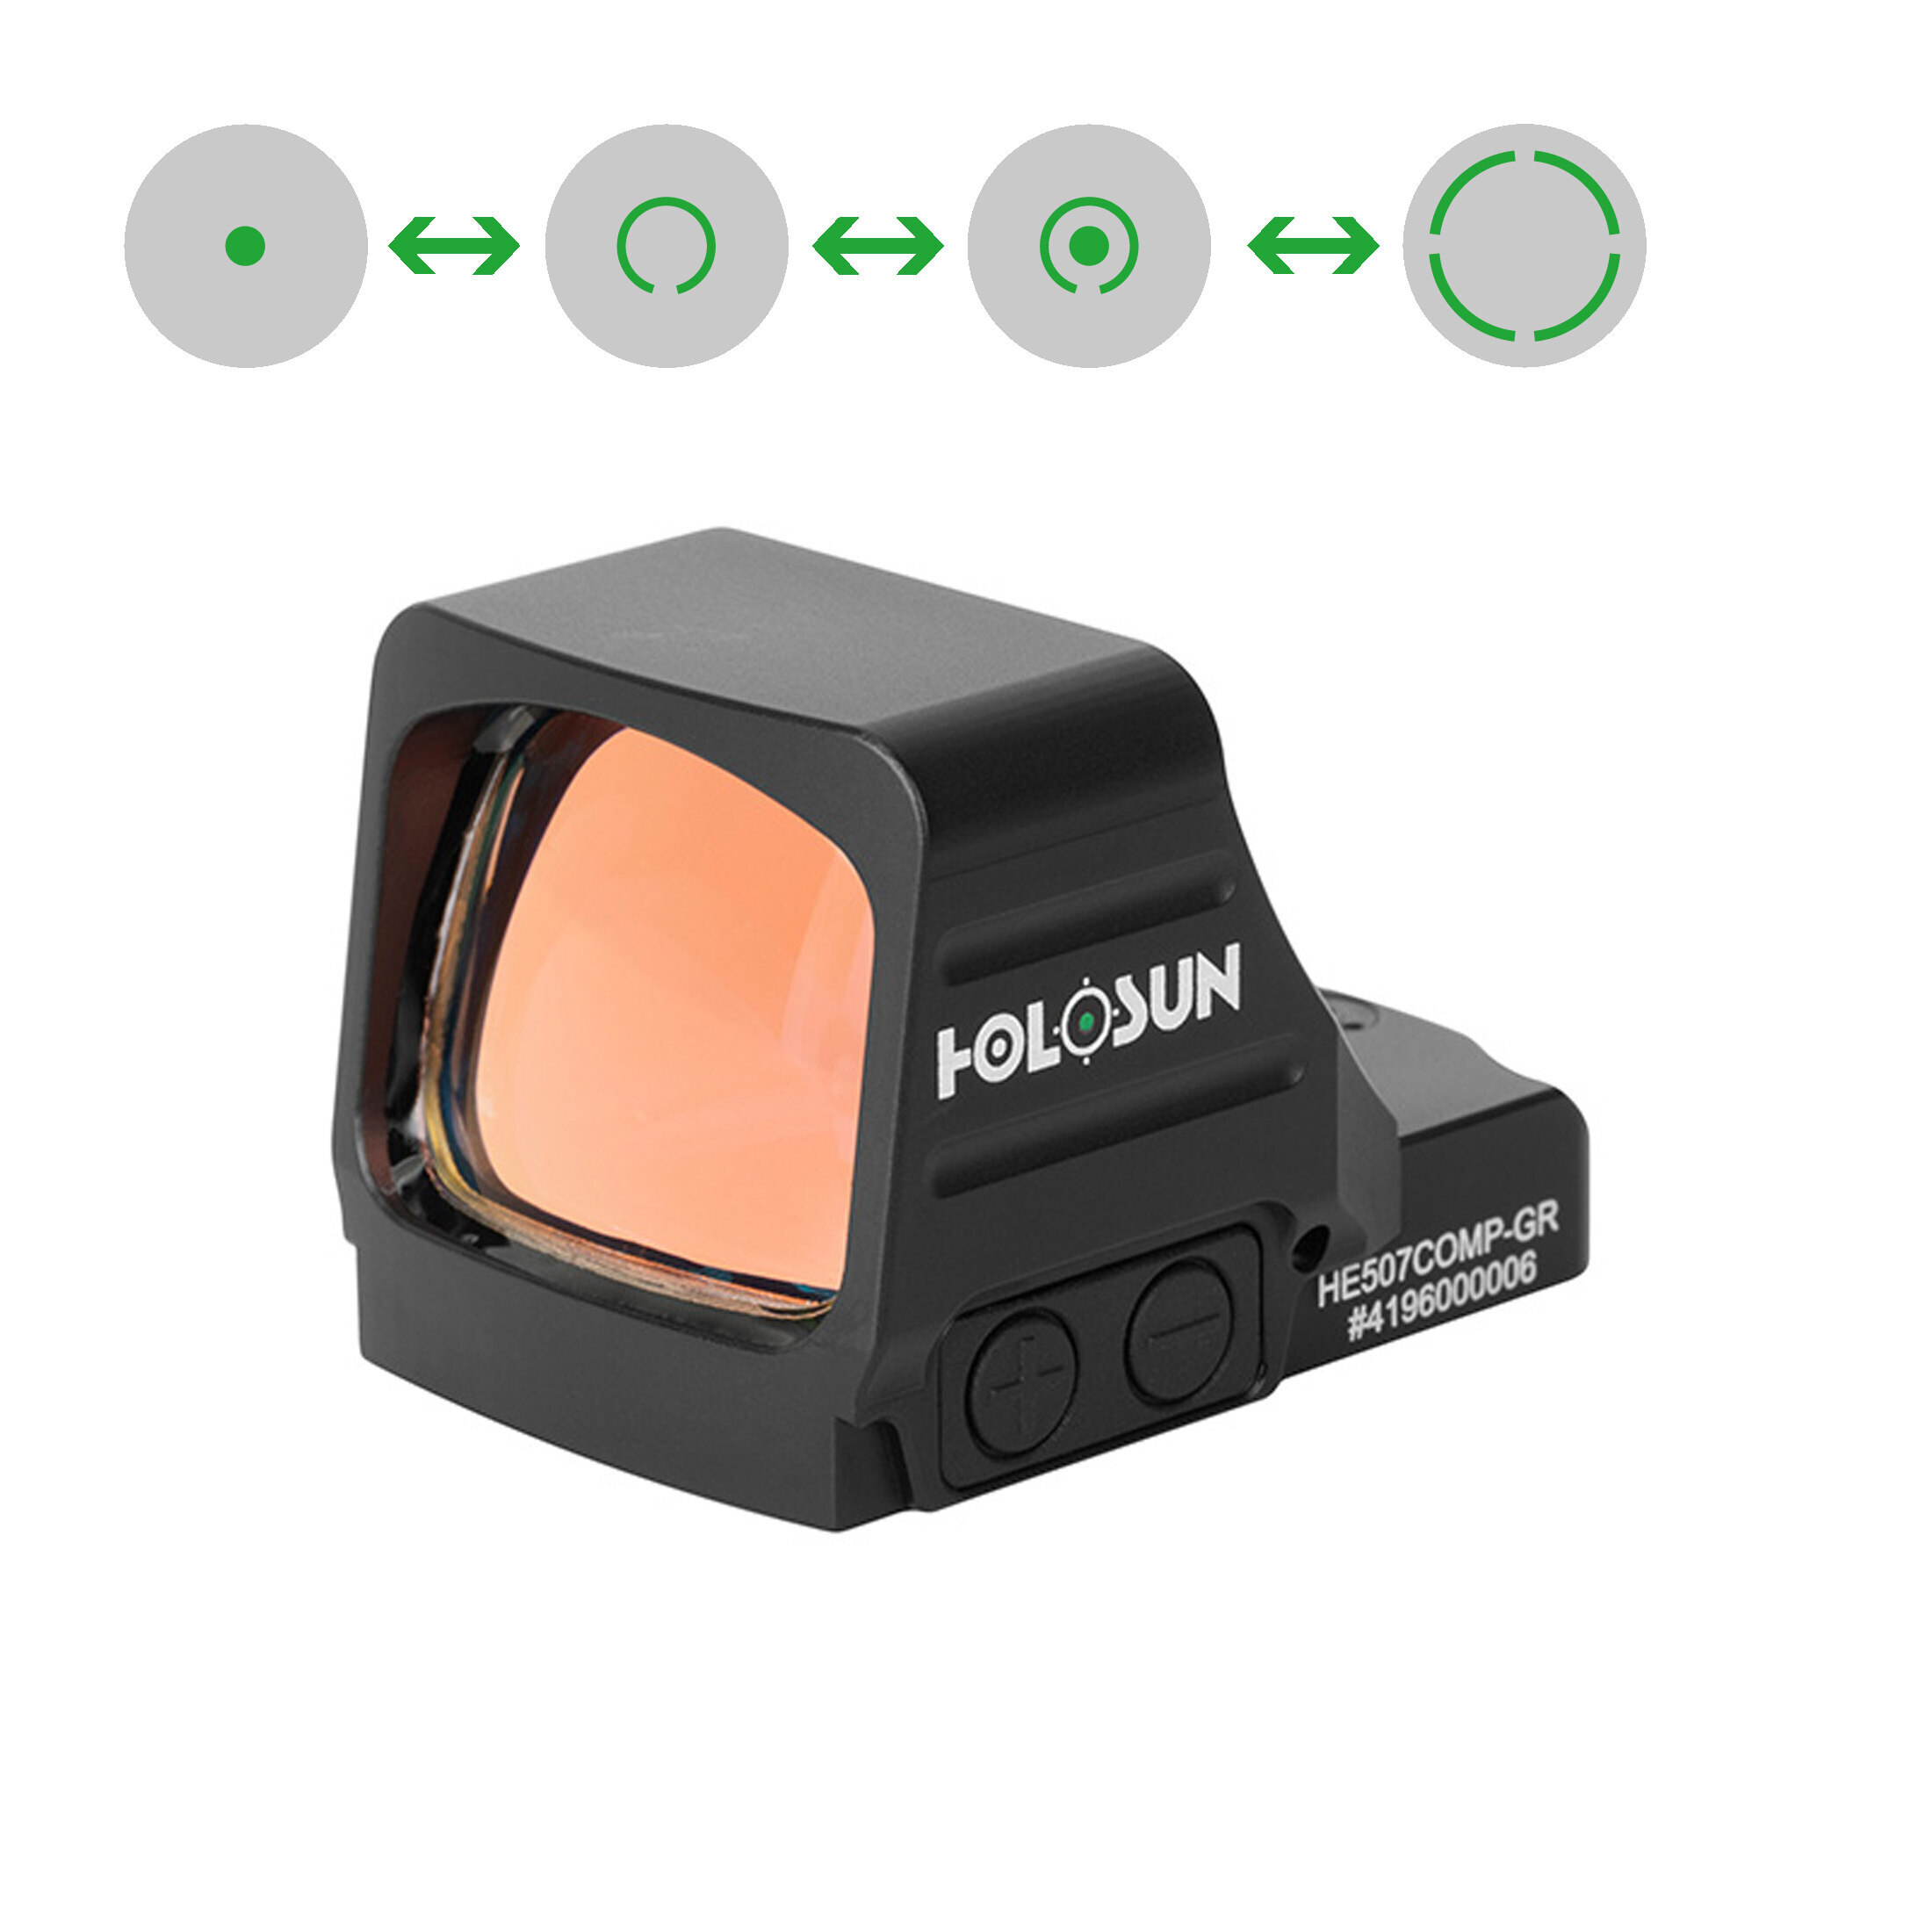 Holosun åpent refleksvisir HE507COMP-GR med utskiftbart sikte, grønnpunkt visir, jakt, airsoft, mil…